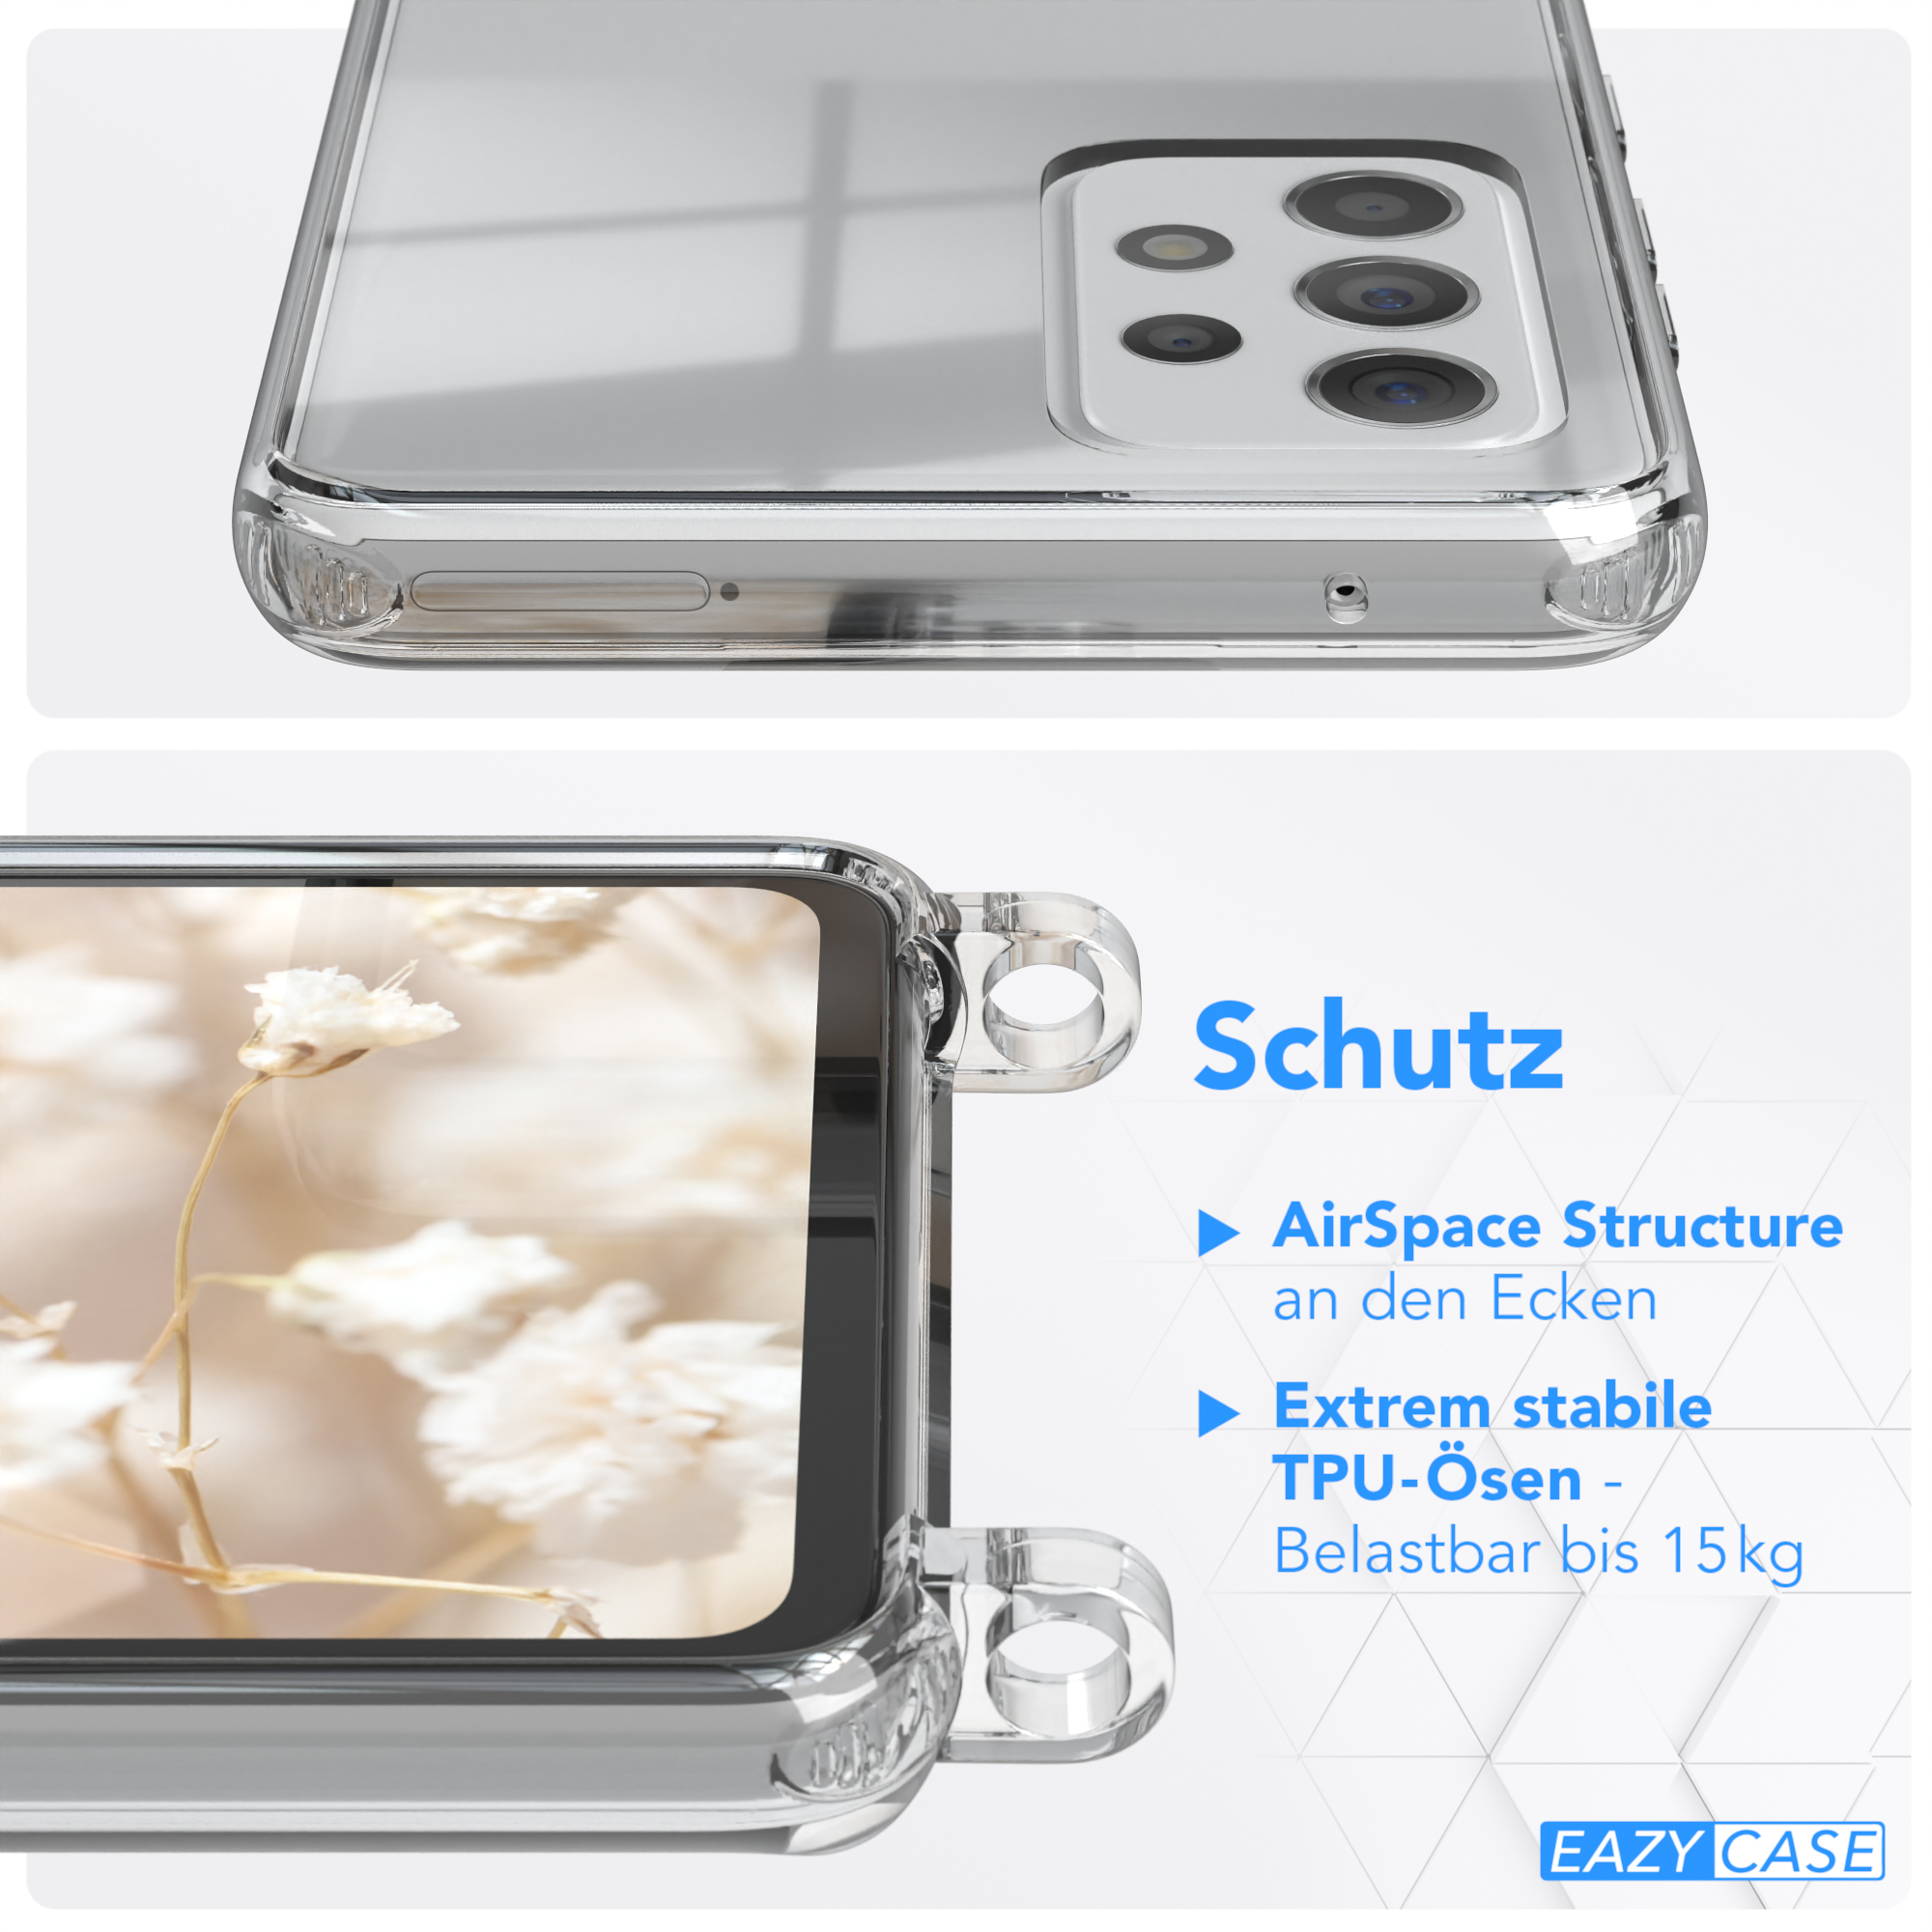 EAZY CASE Transparente Handyhülle A52 Galaxy Umhängetasche, Style, / Grün mit Boho A52s Orange 5G, 5G Samsung, Kordel A52 / 